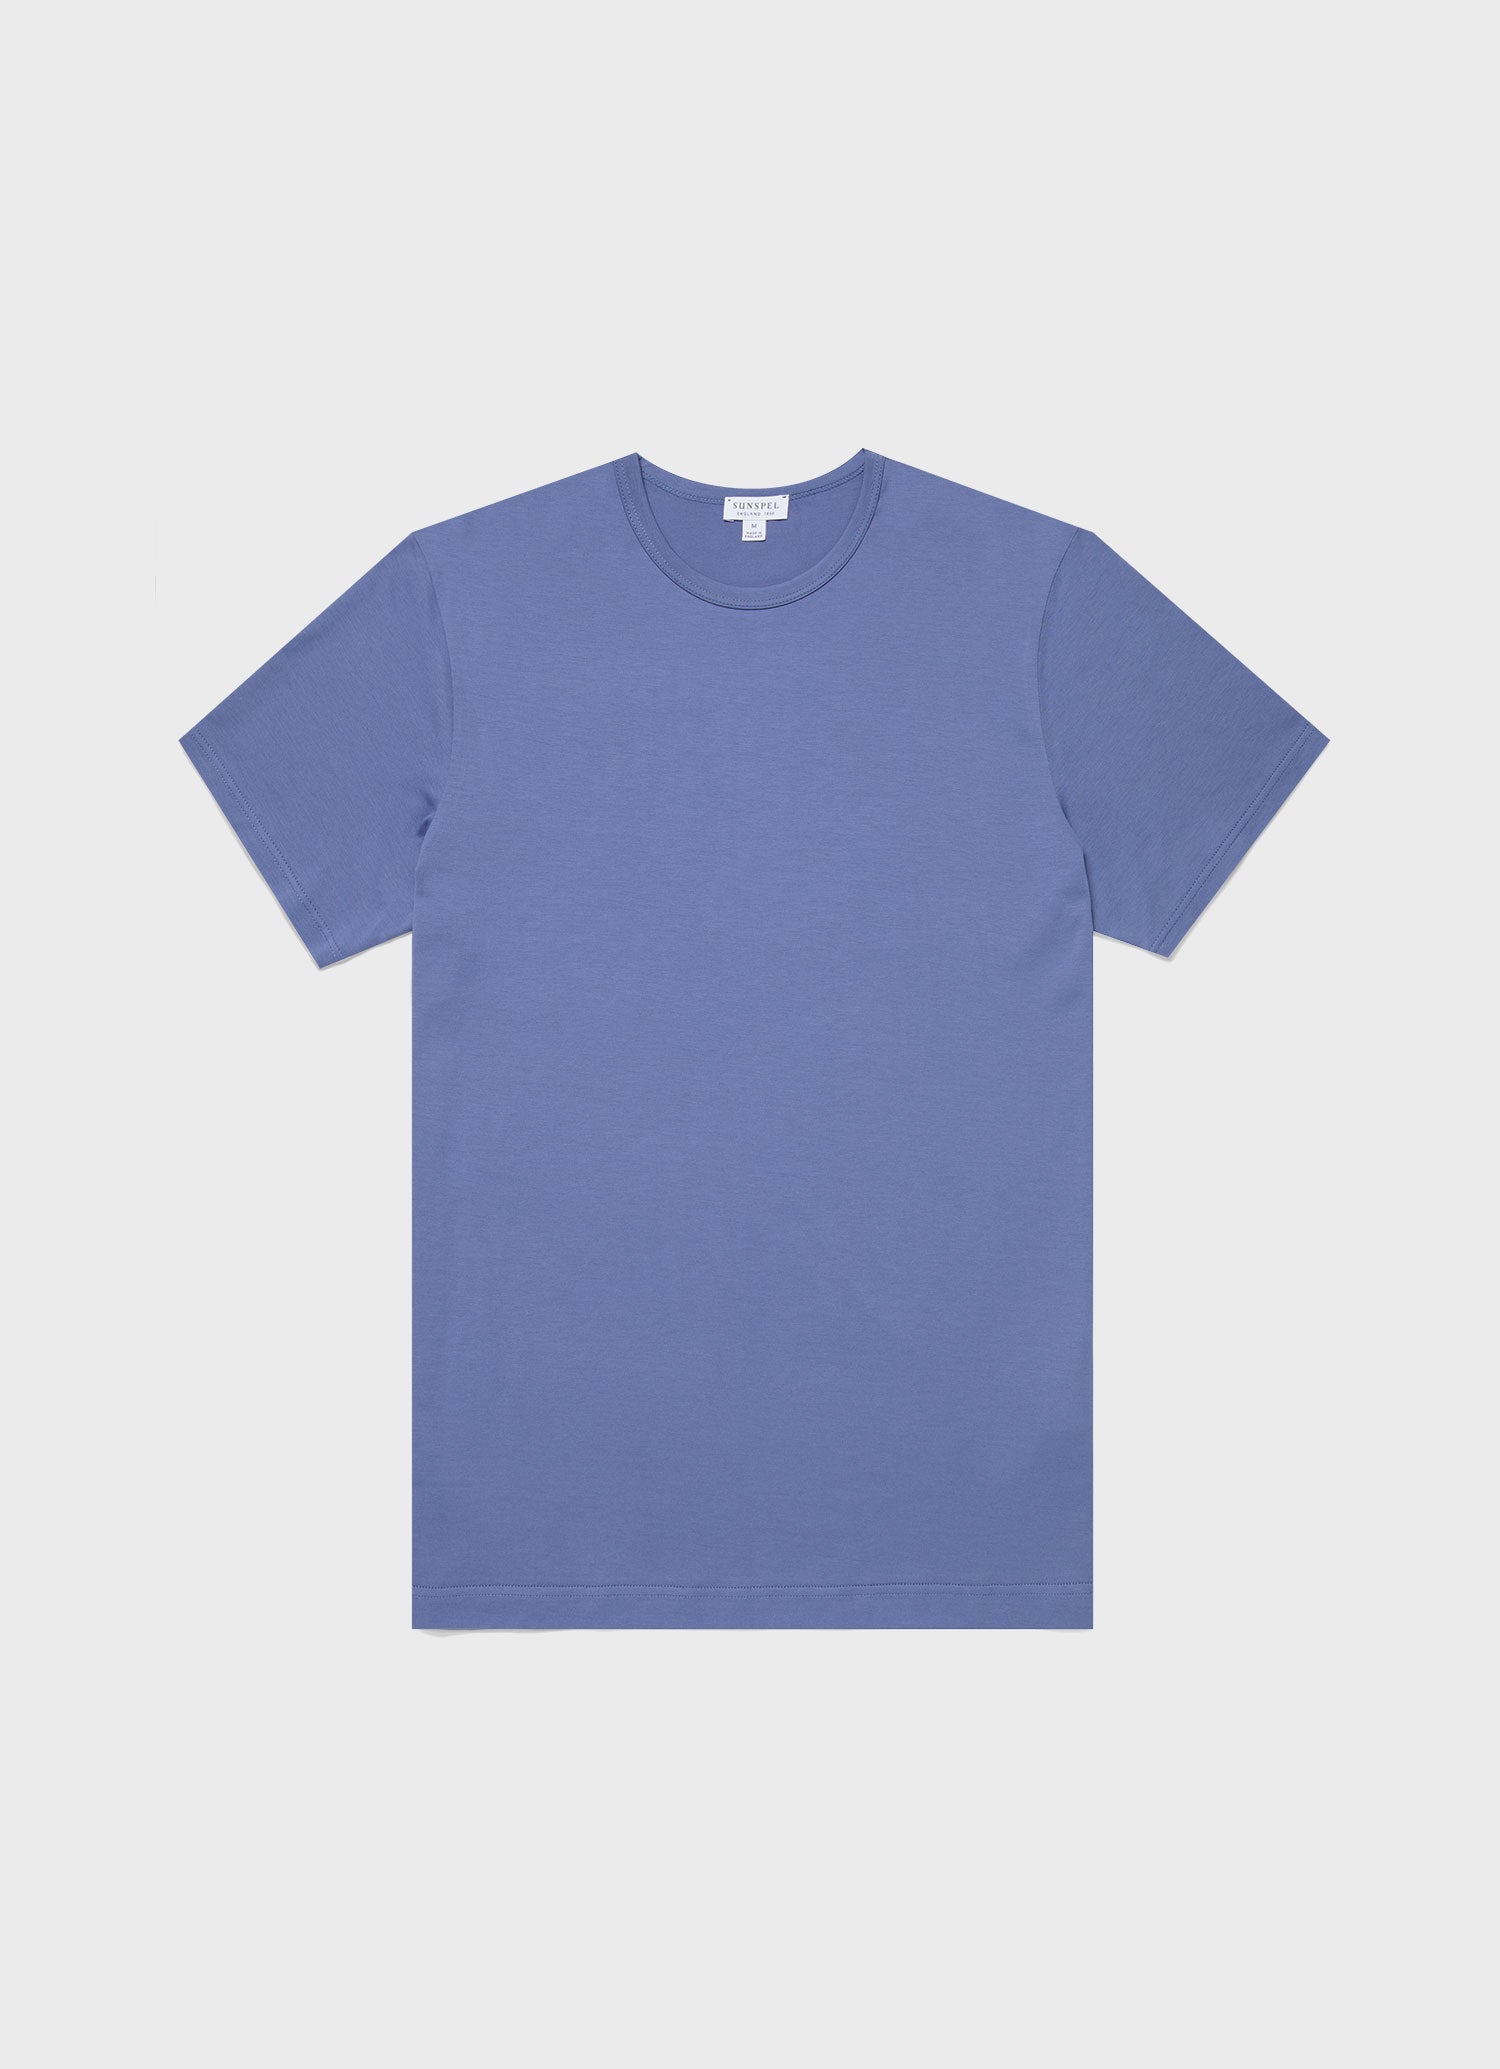 Men's Classic T-shirt in Grape